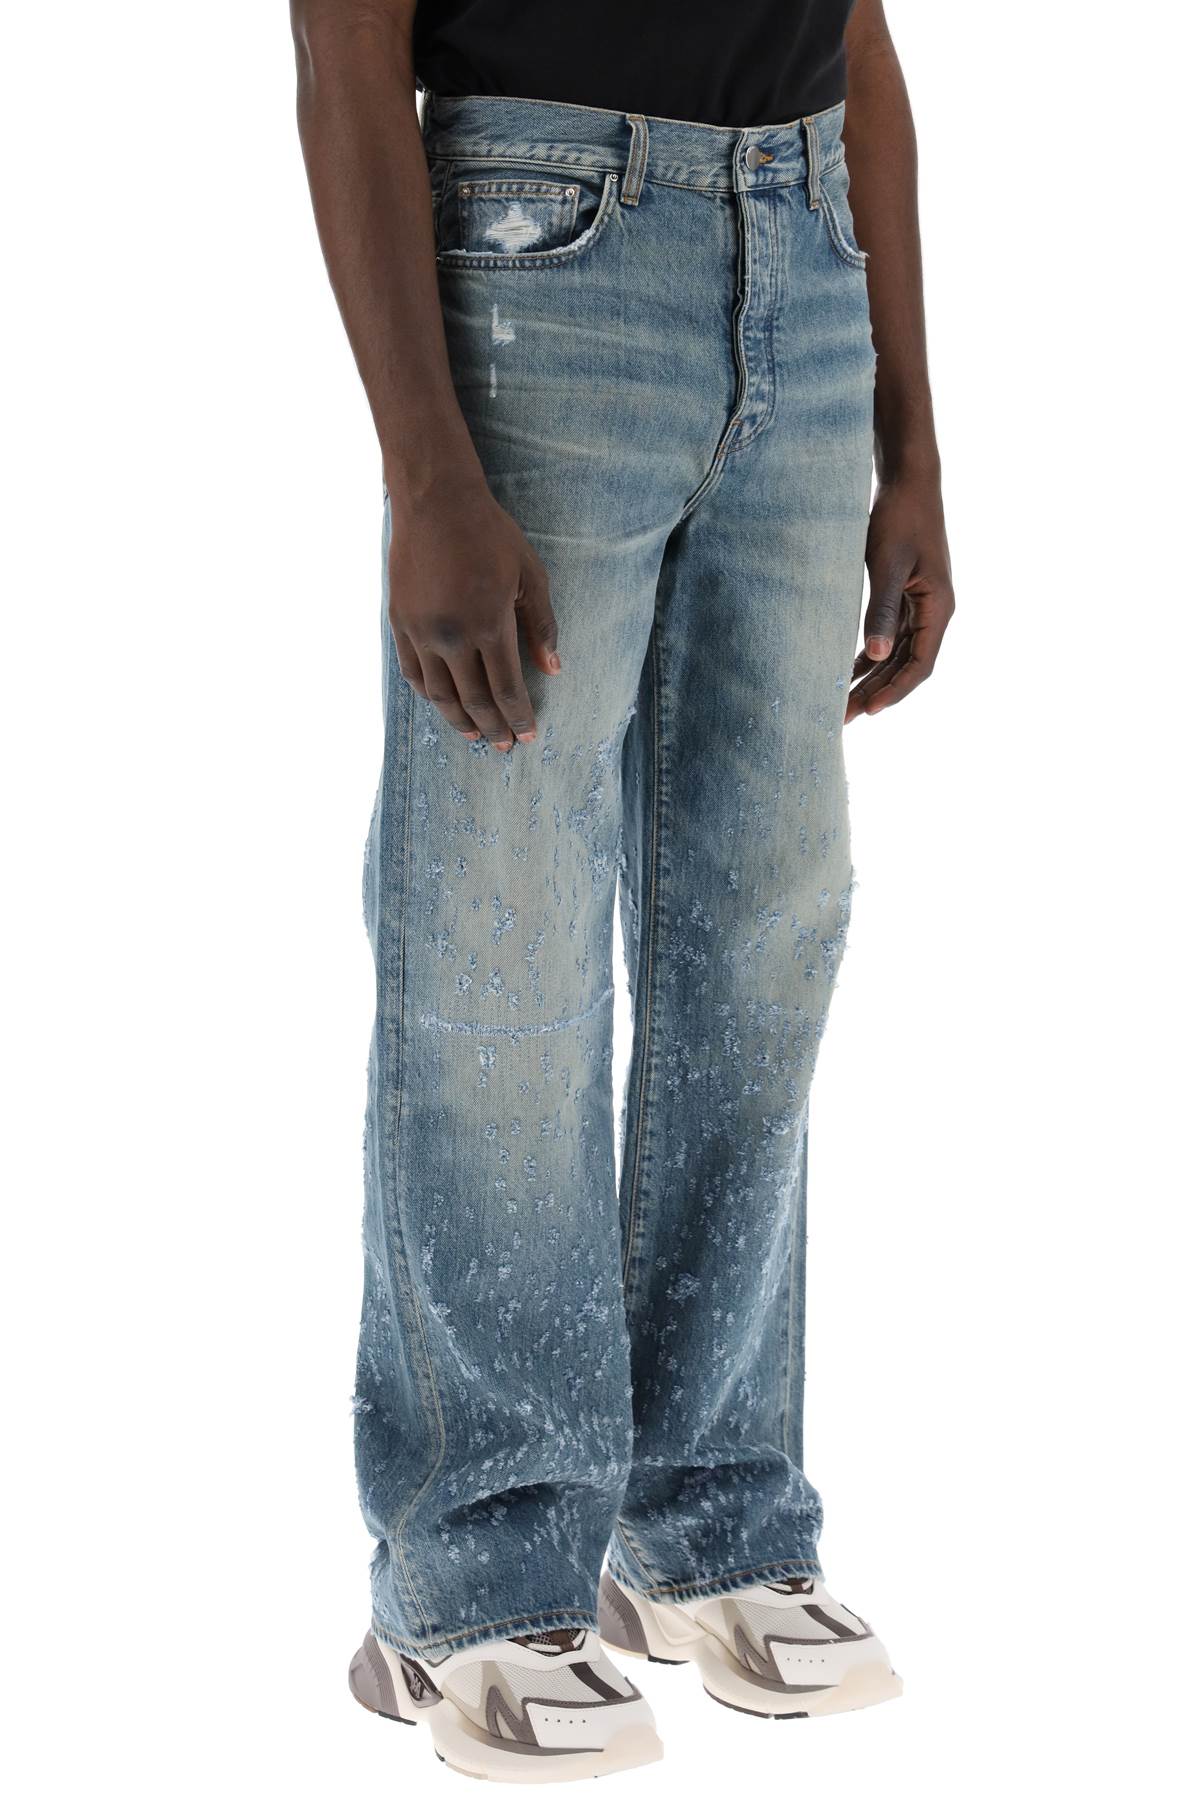 AMIRI Men's Distressed Medium Wash Denim Baggy Jeans